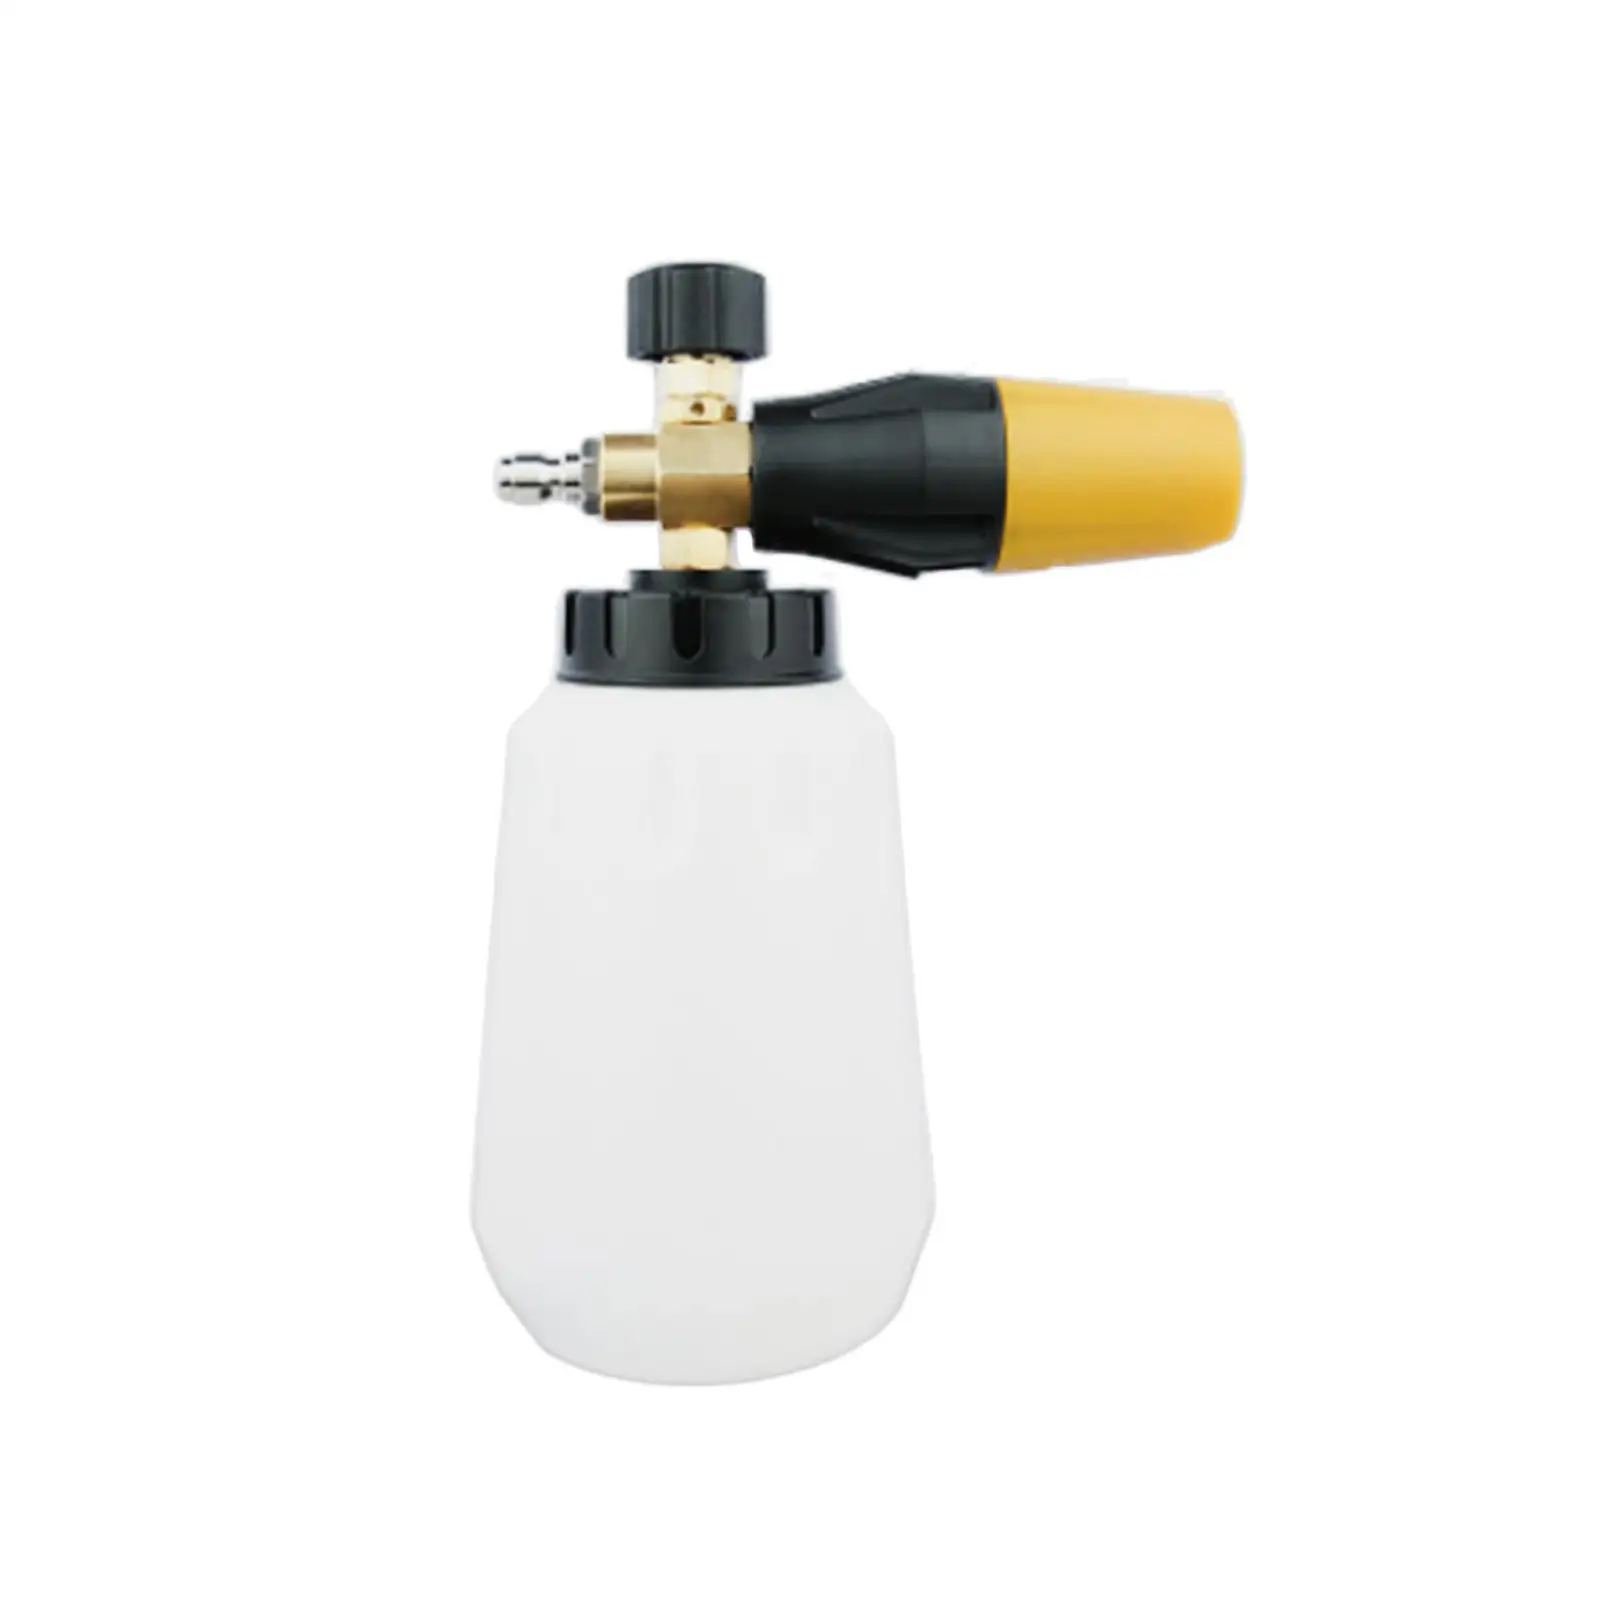 1 Wash Foam Sprayer, Foam Cars Watering Washing Tool Garden Water Bottle Tools Adjustable Cleaner for